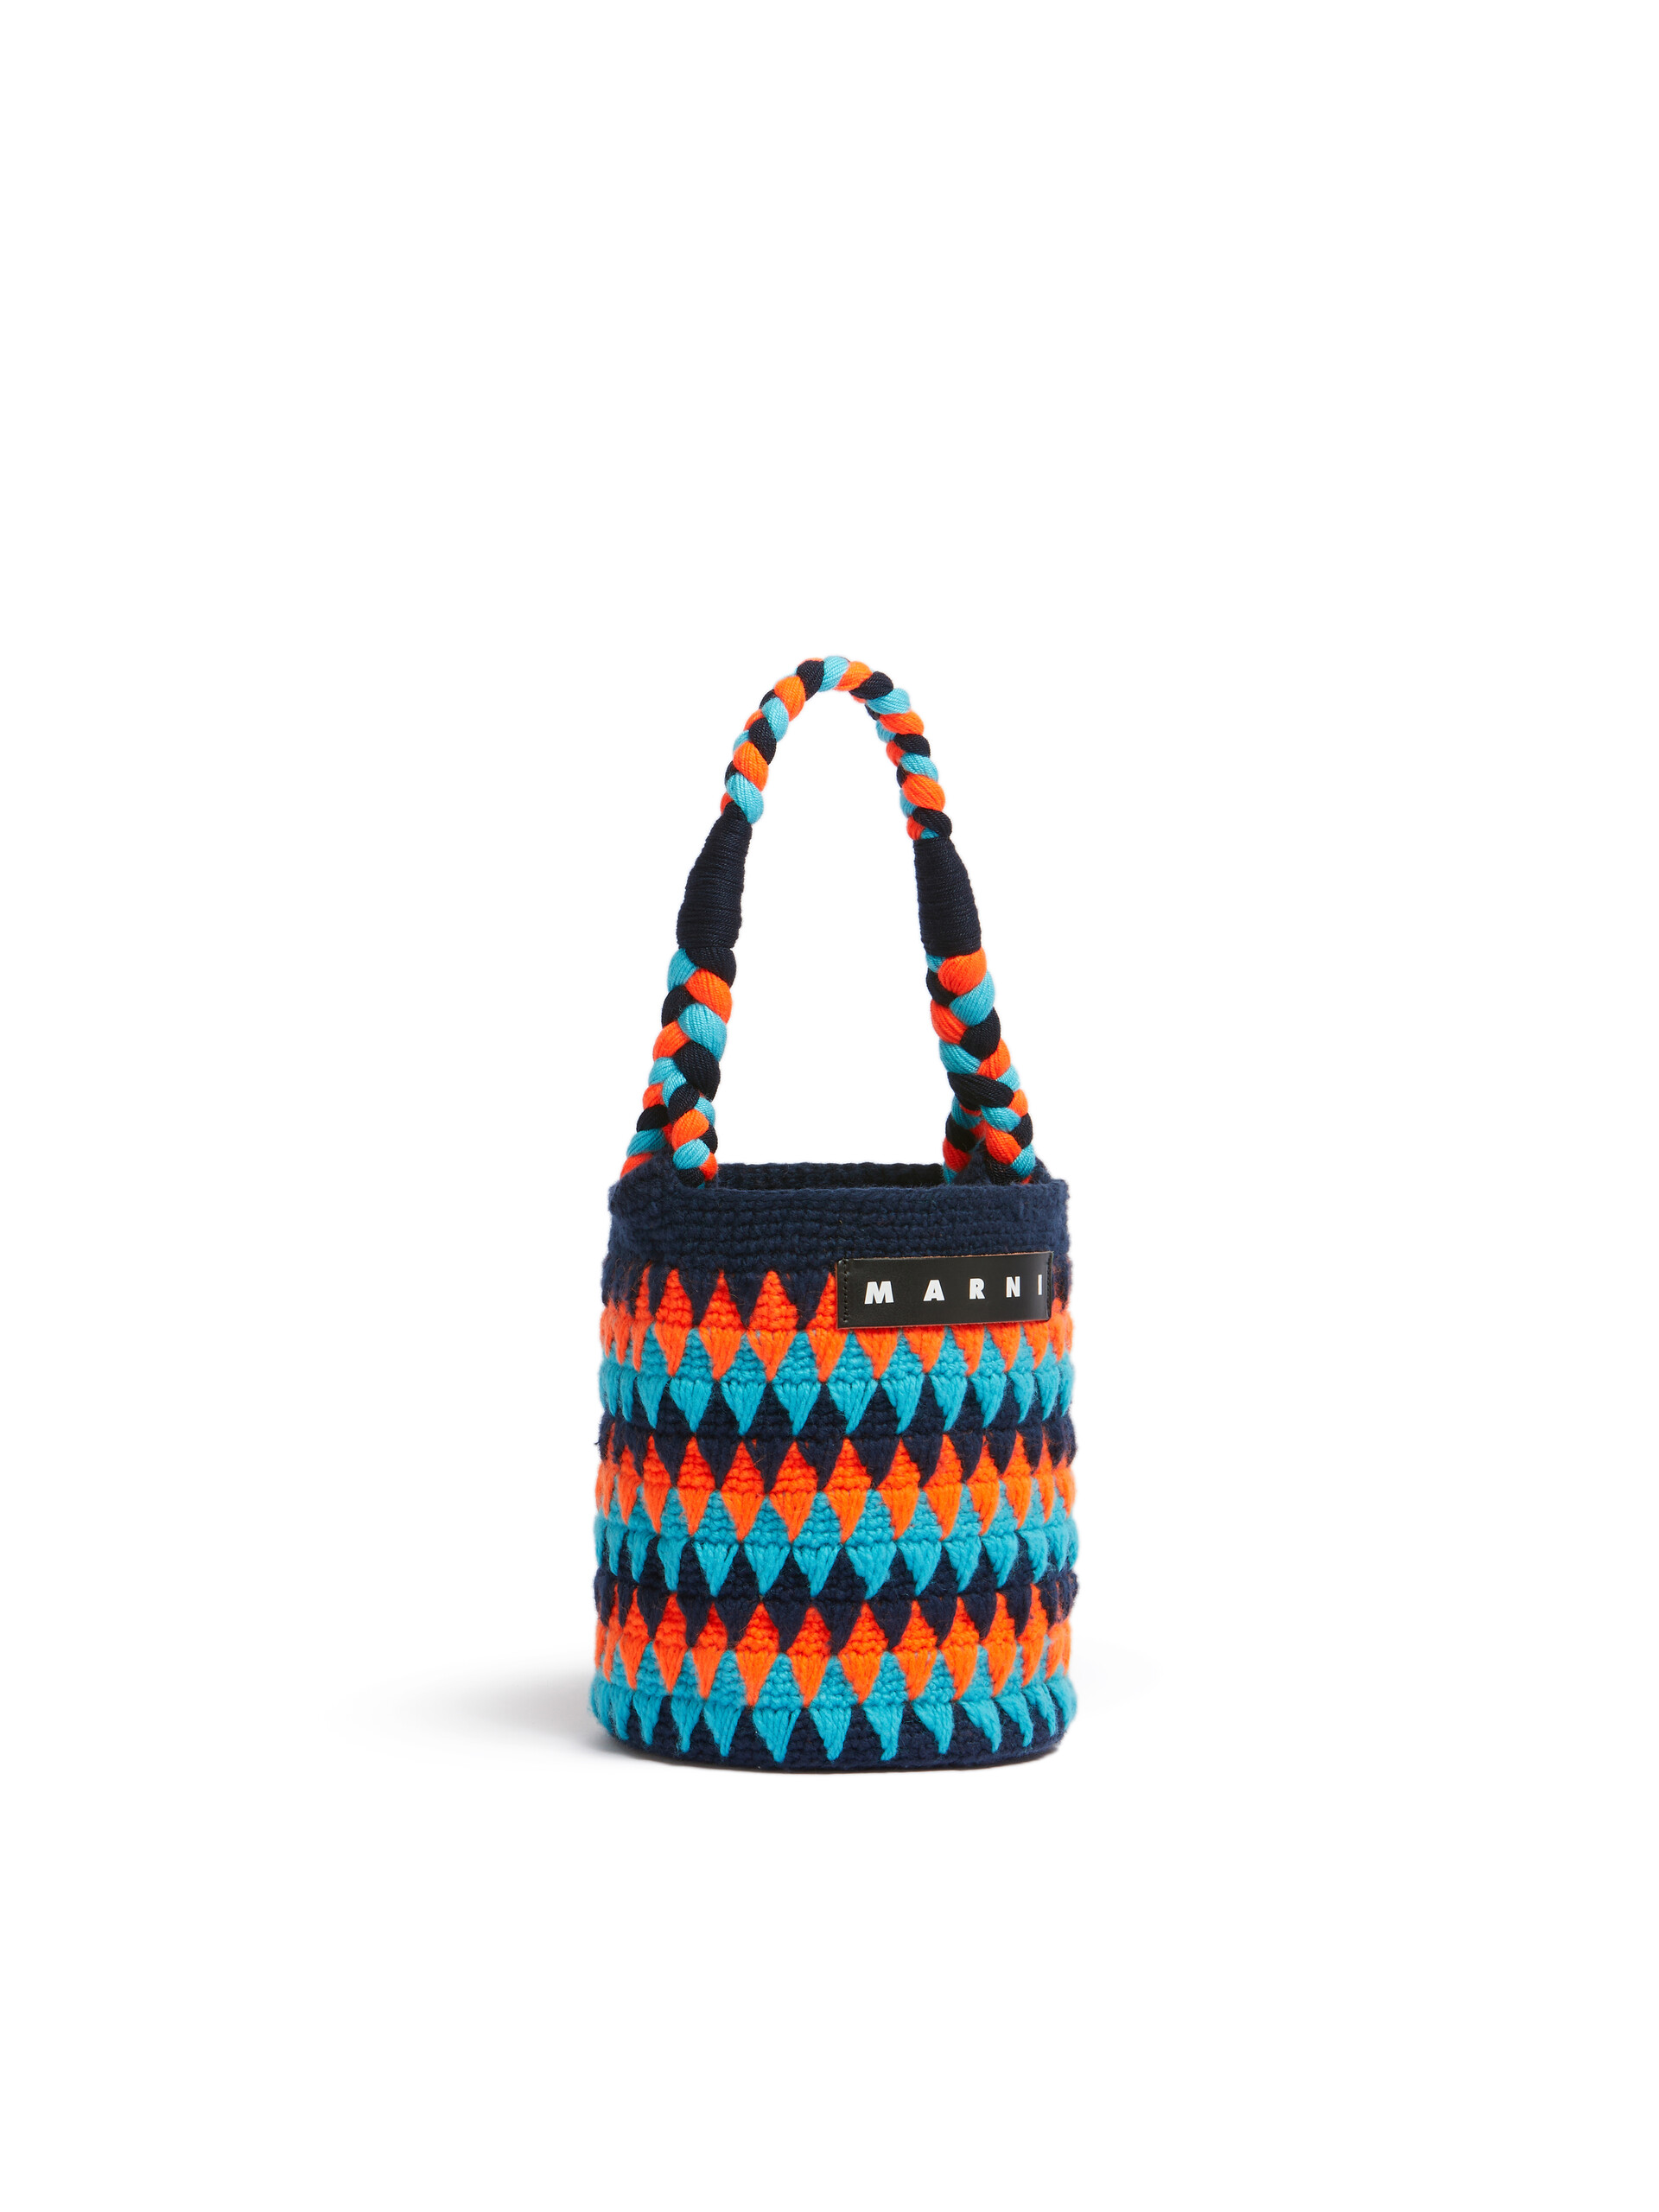 Orange And Blue Crochet Marni Market Chessboard Bag - Shopping Bags - Image 2